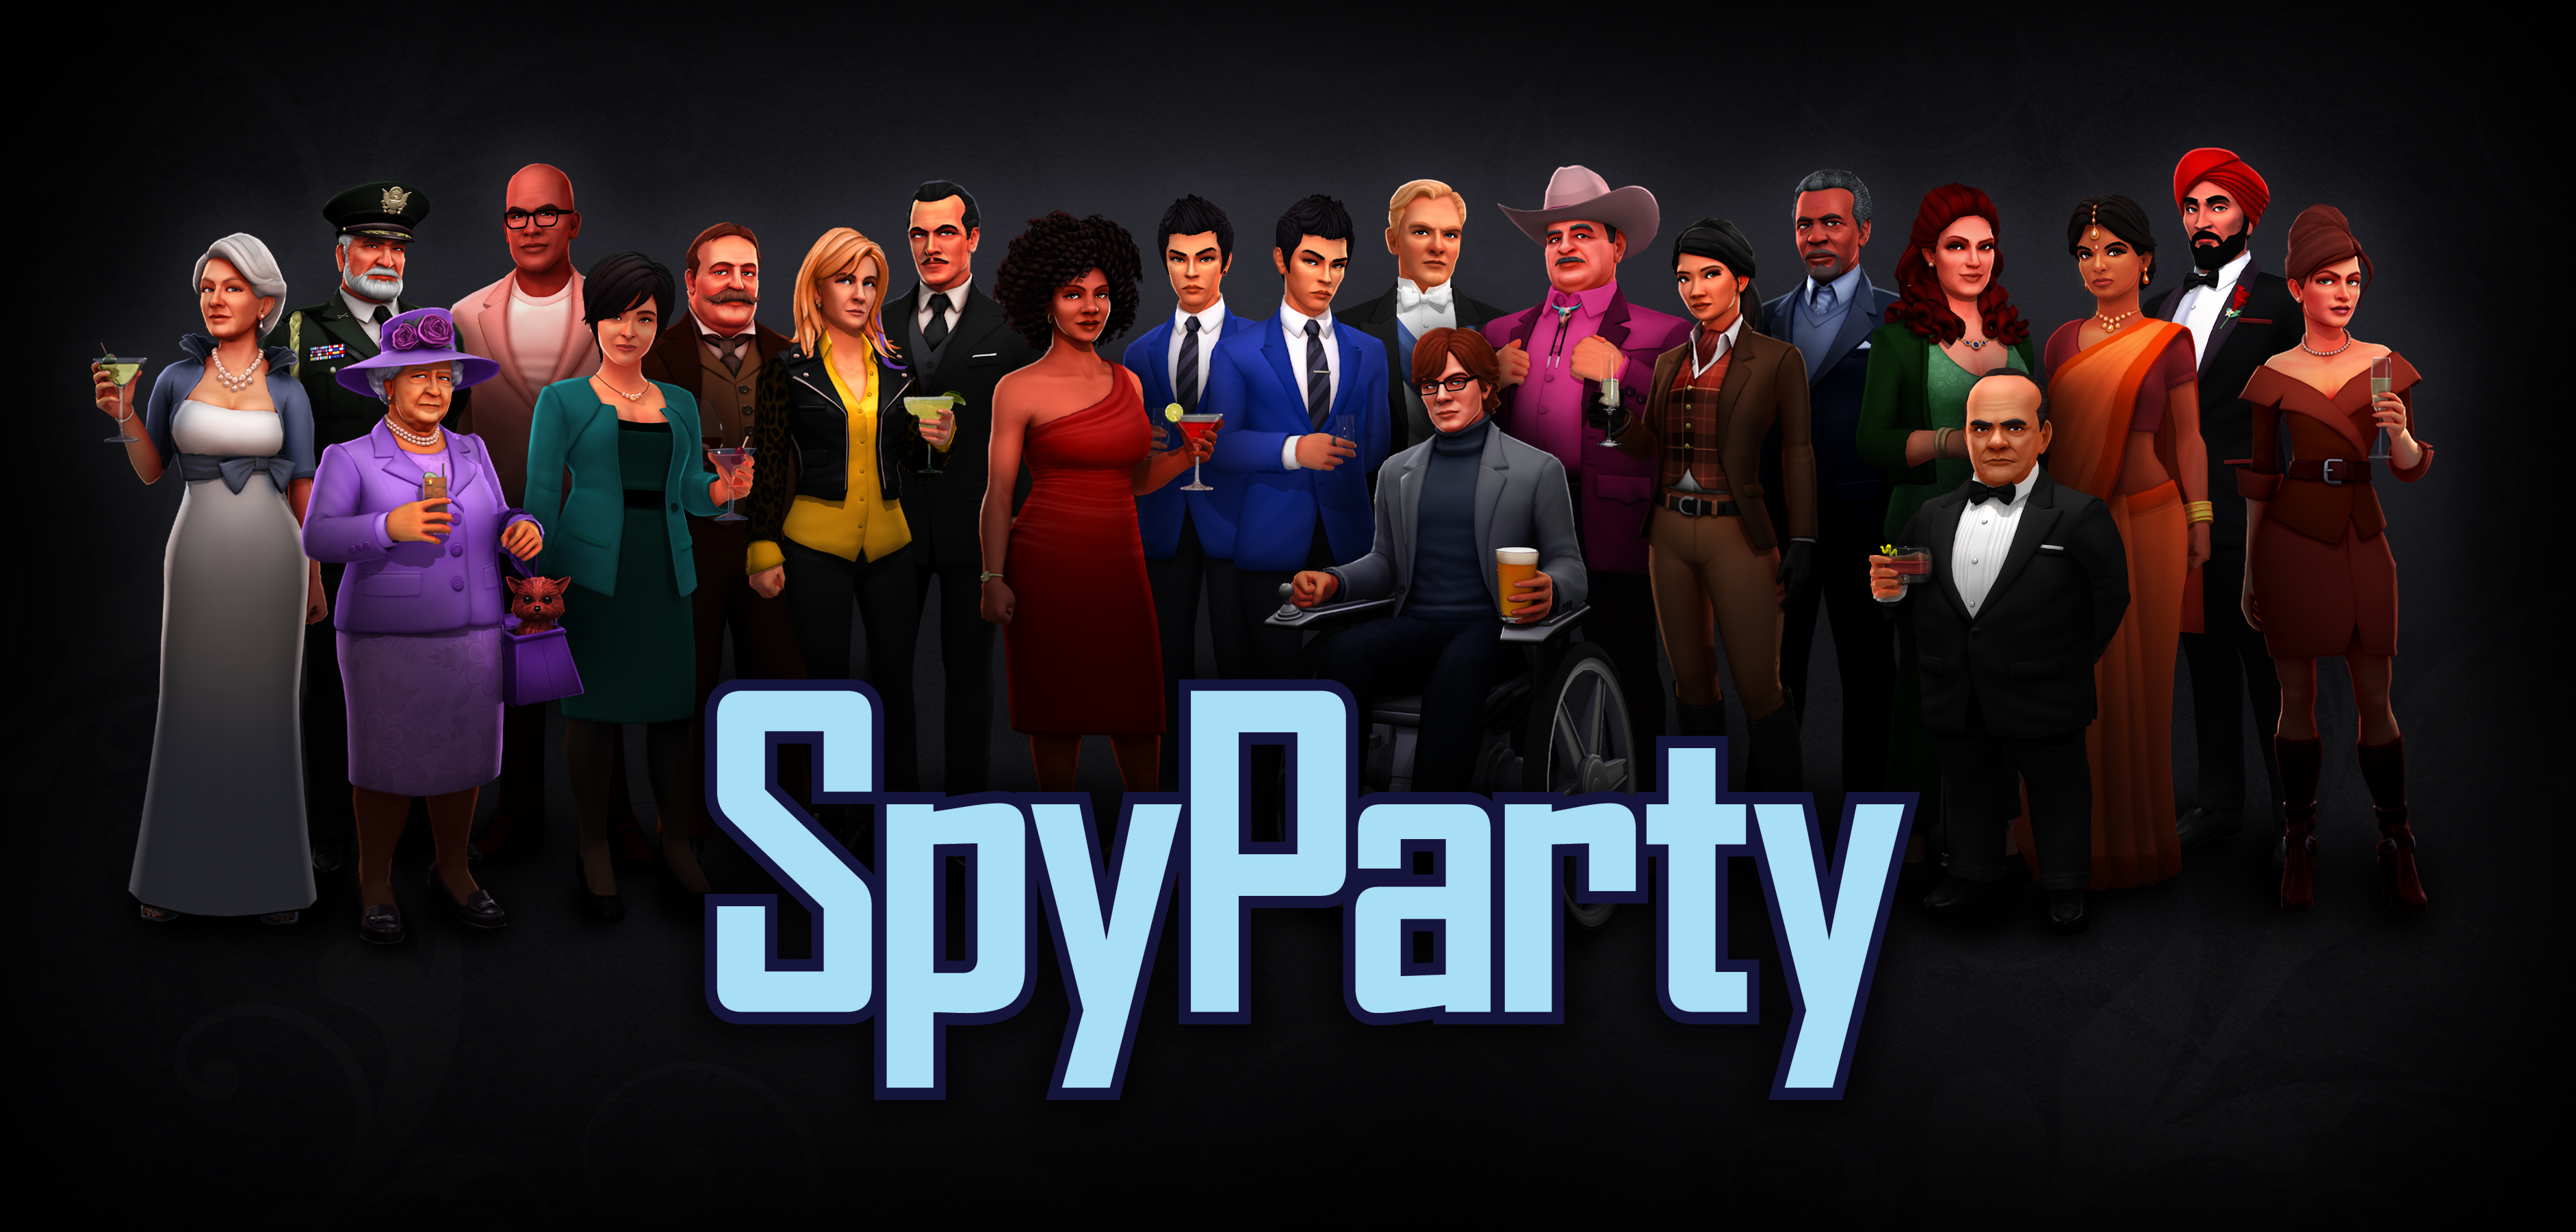 SpyParty !